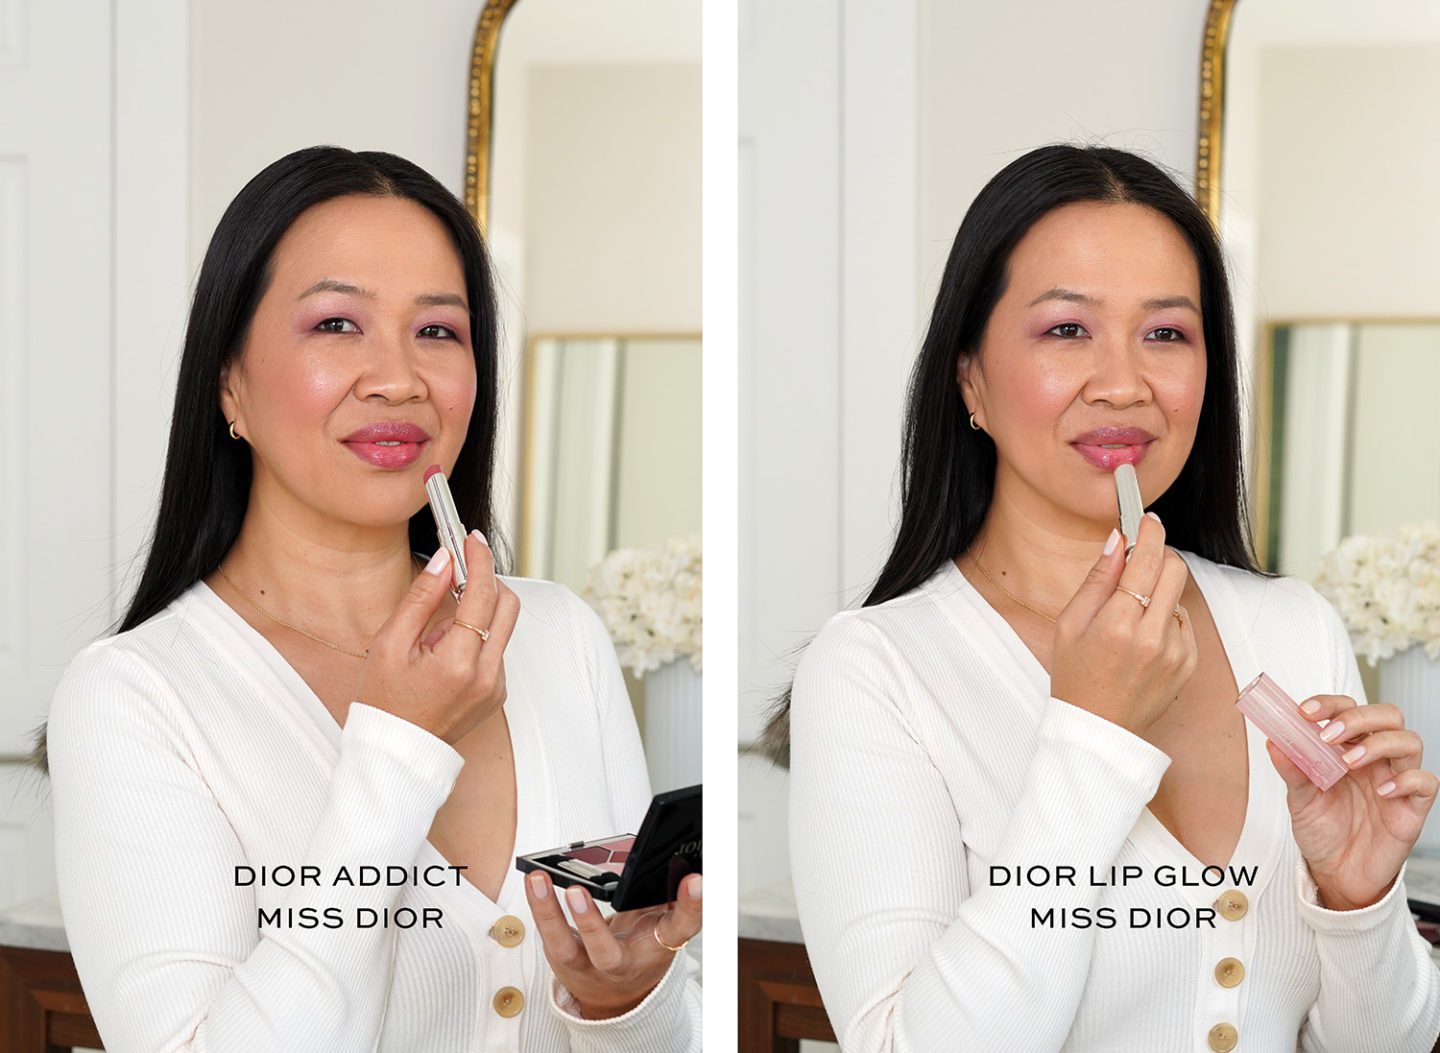 Dior Addict and Lip Glow in Miss Dior